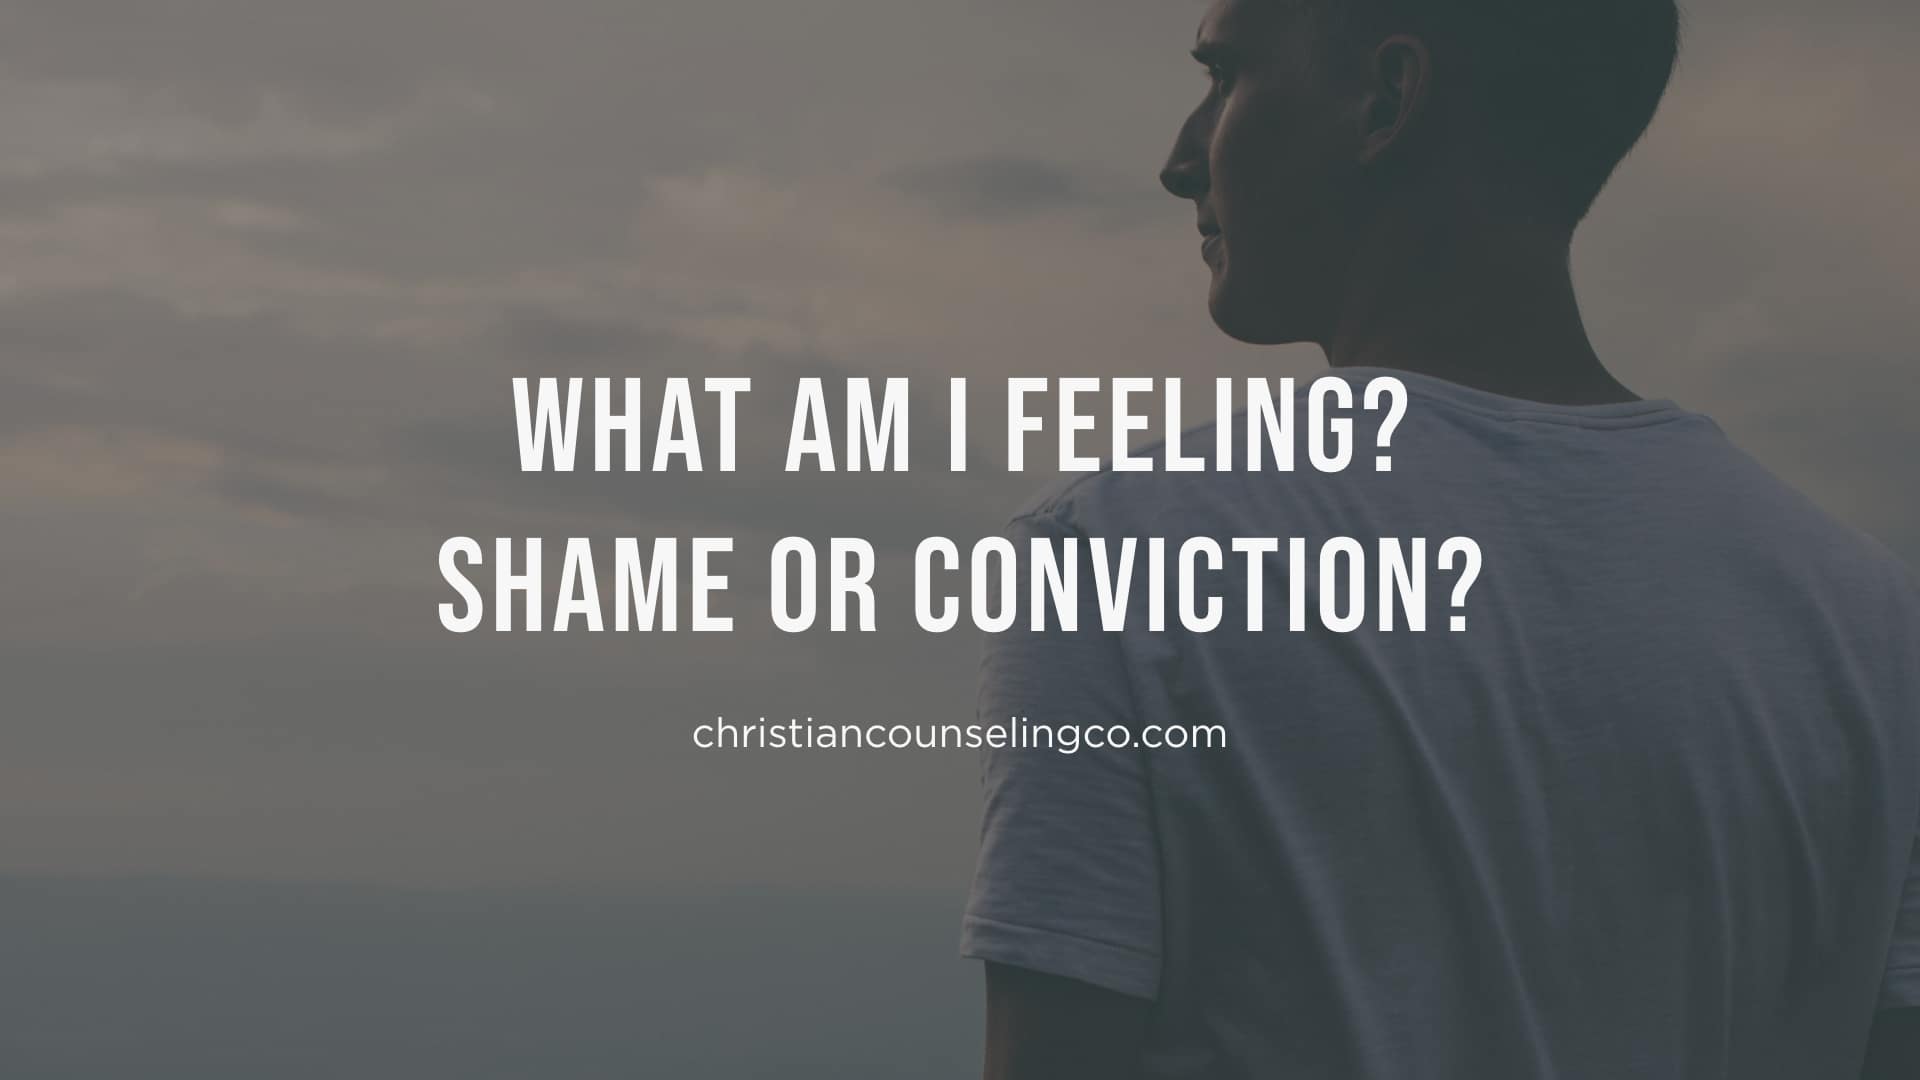 Shame or Conviction?